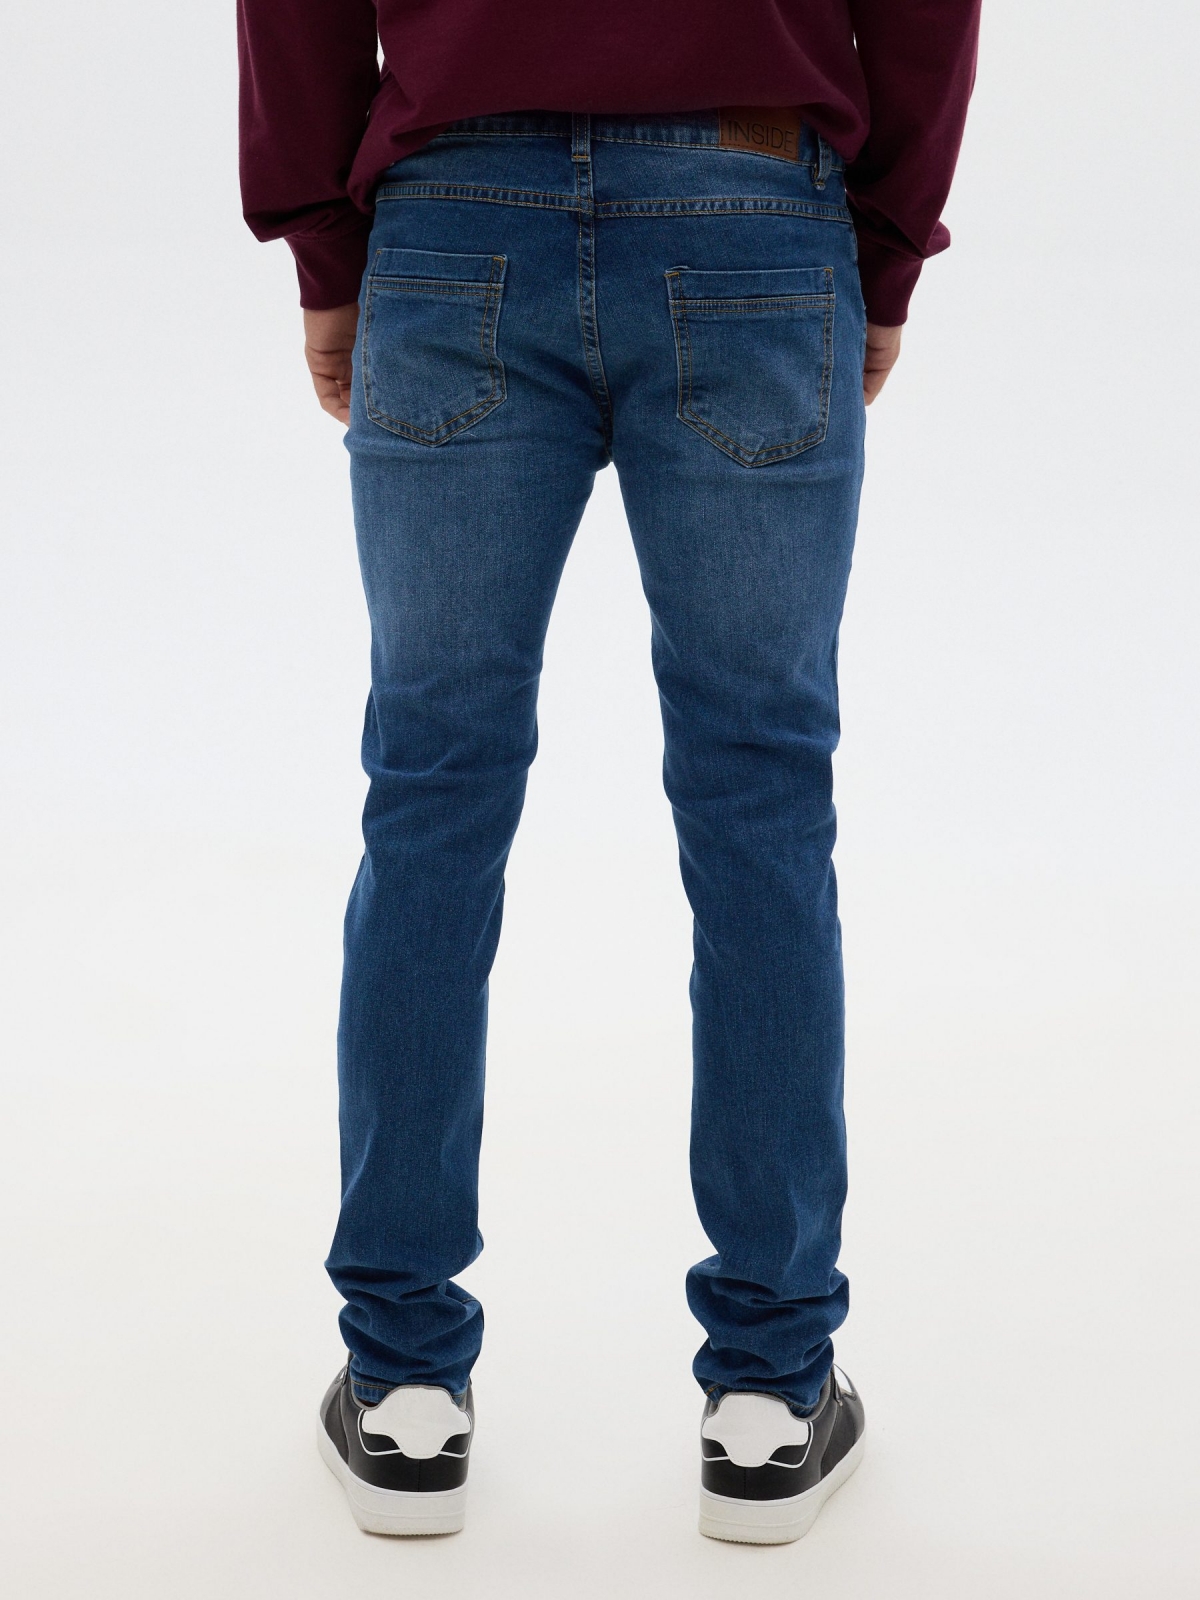 Jeans super slim azul vista media trasera